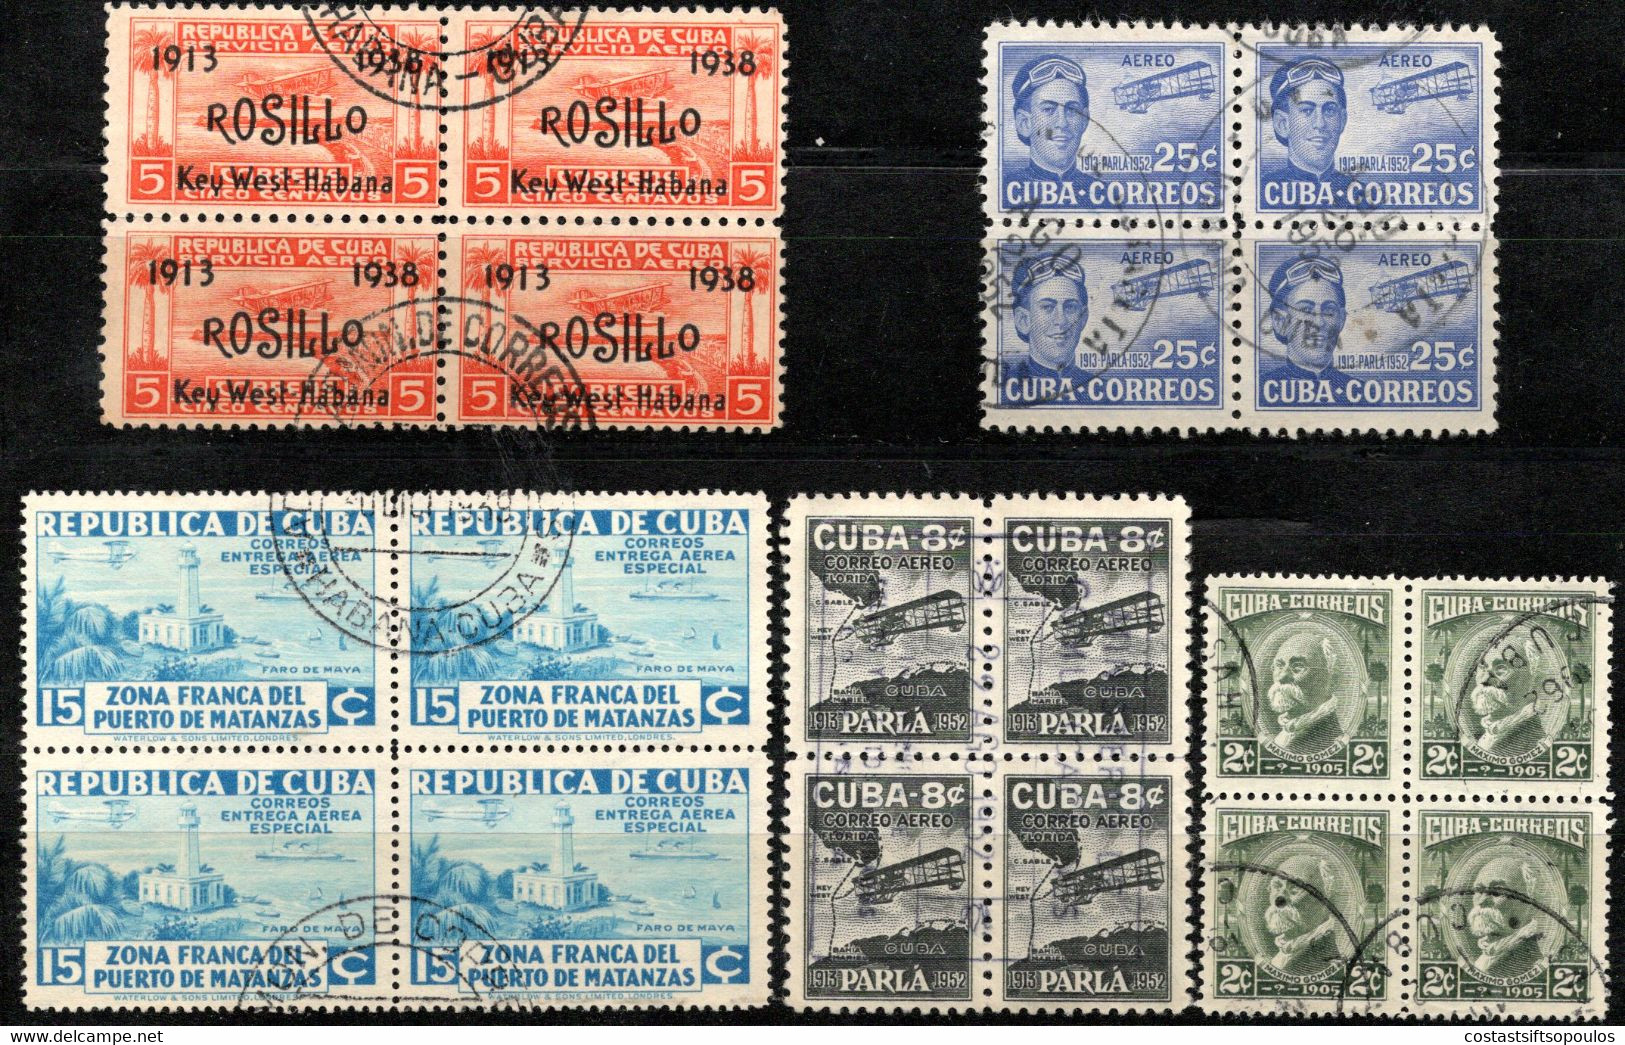 213.CUBA.NICE LOT OF 2 1940 GUTTER PAIRS,MNH,5 USED BLOCKS OF 4,2 MNH TELEGRAPH BLOCKS OF 4,6 SCANS - Collezioni & Lotti